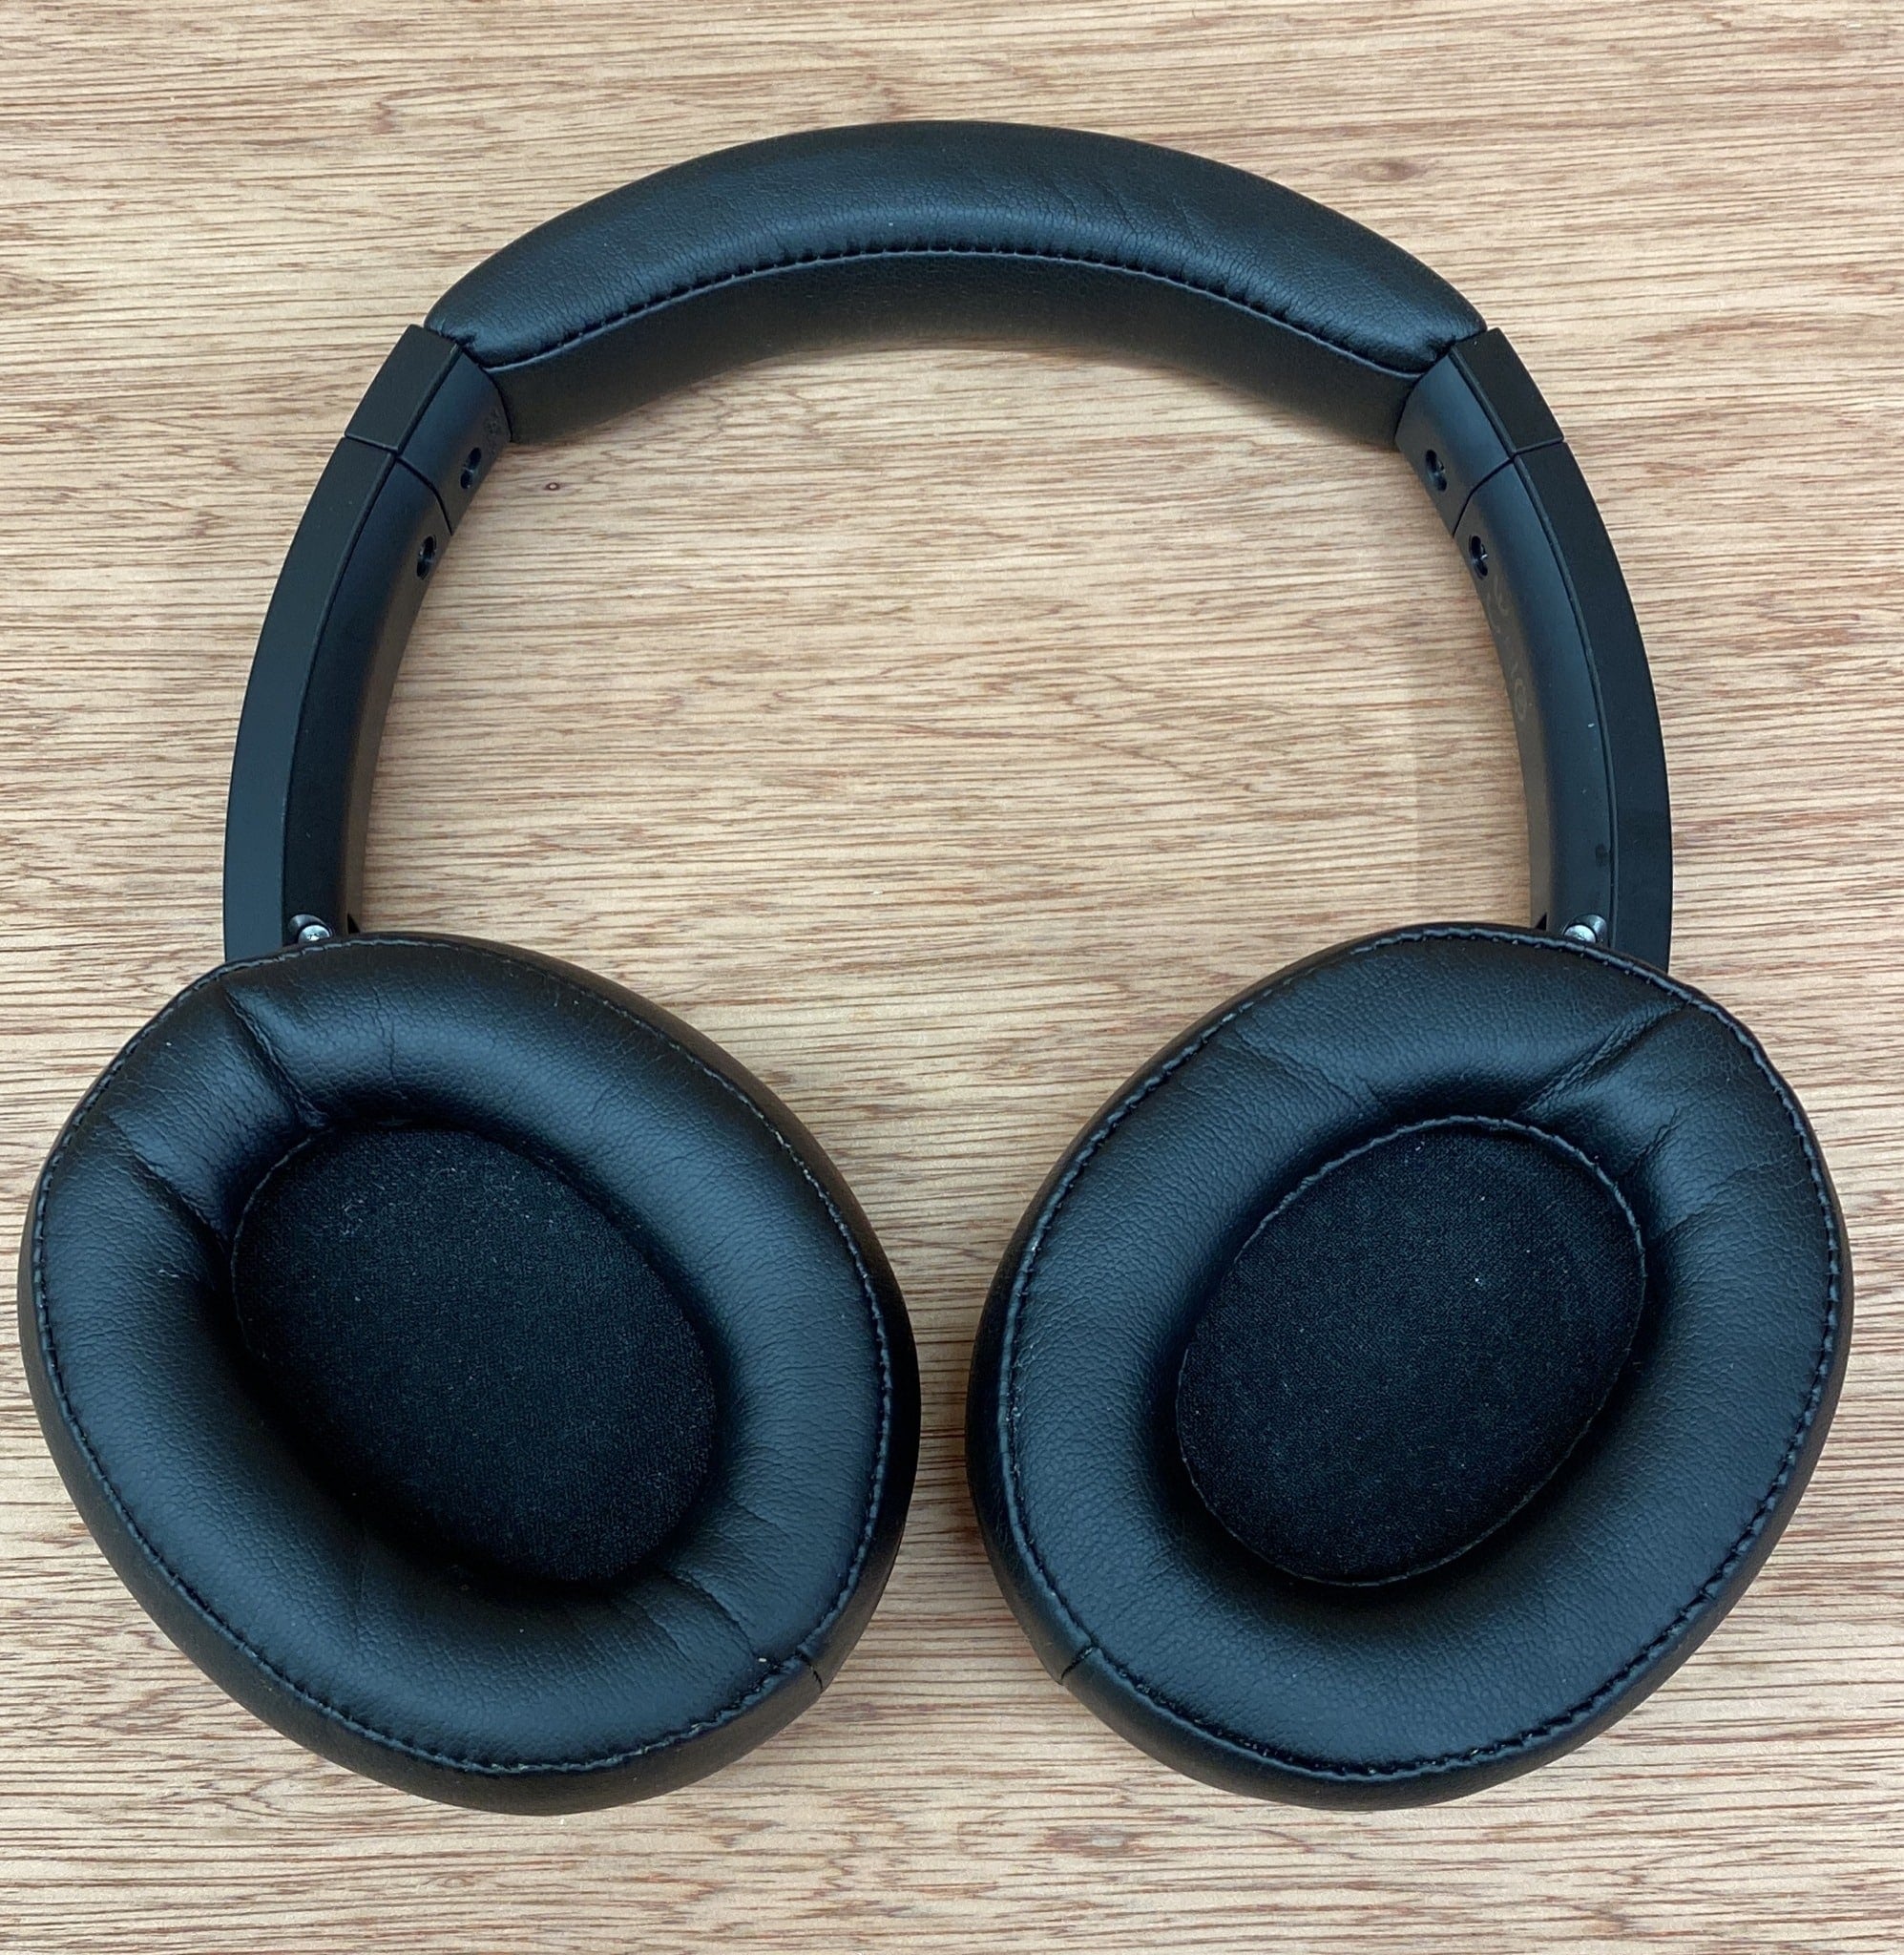 Audio-Technica ATH-SR50BT Bluetooth Wireless Over-Ear Headphones Black 6733